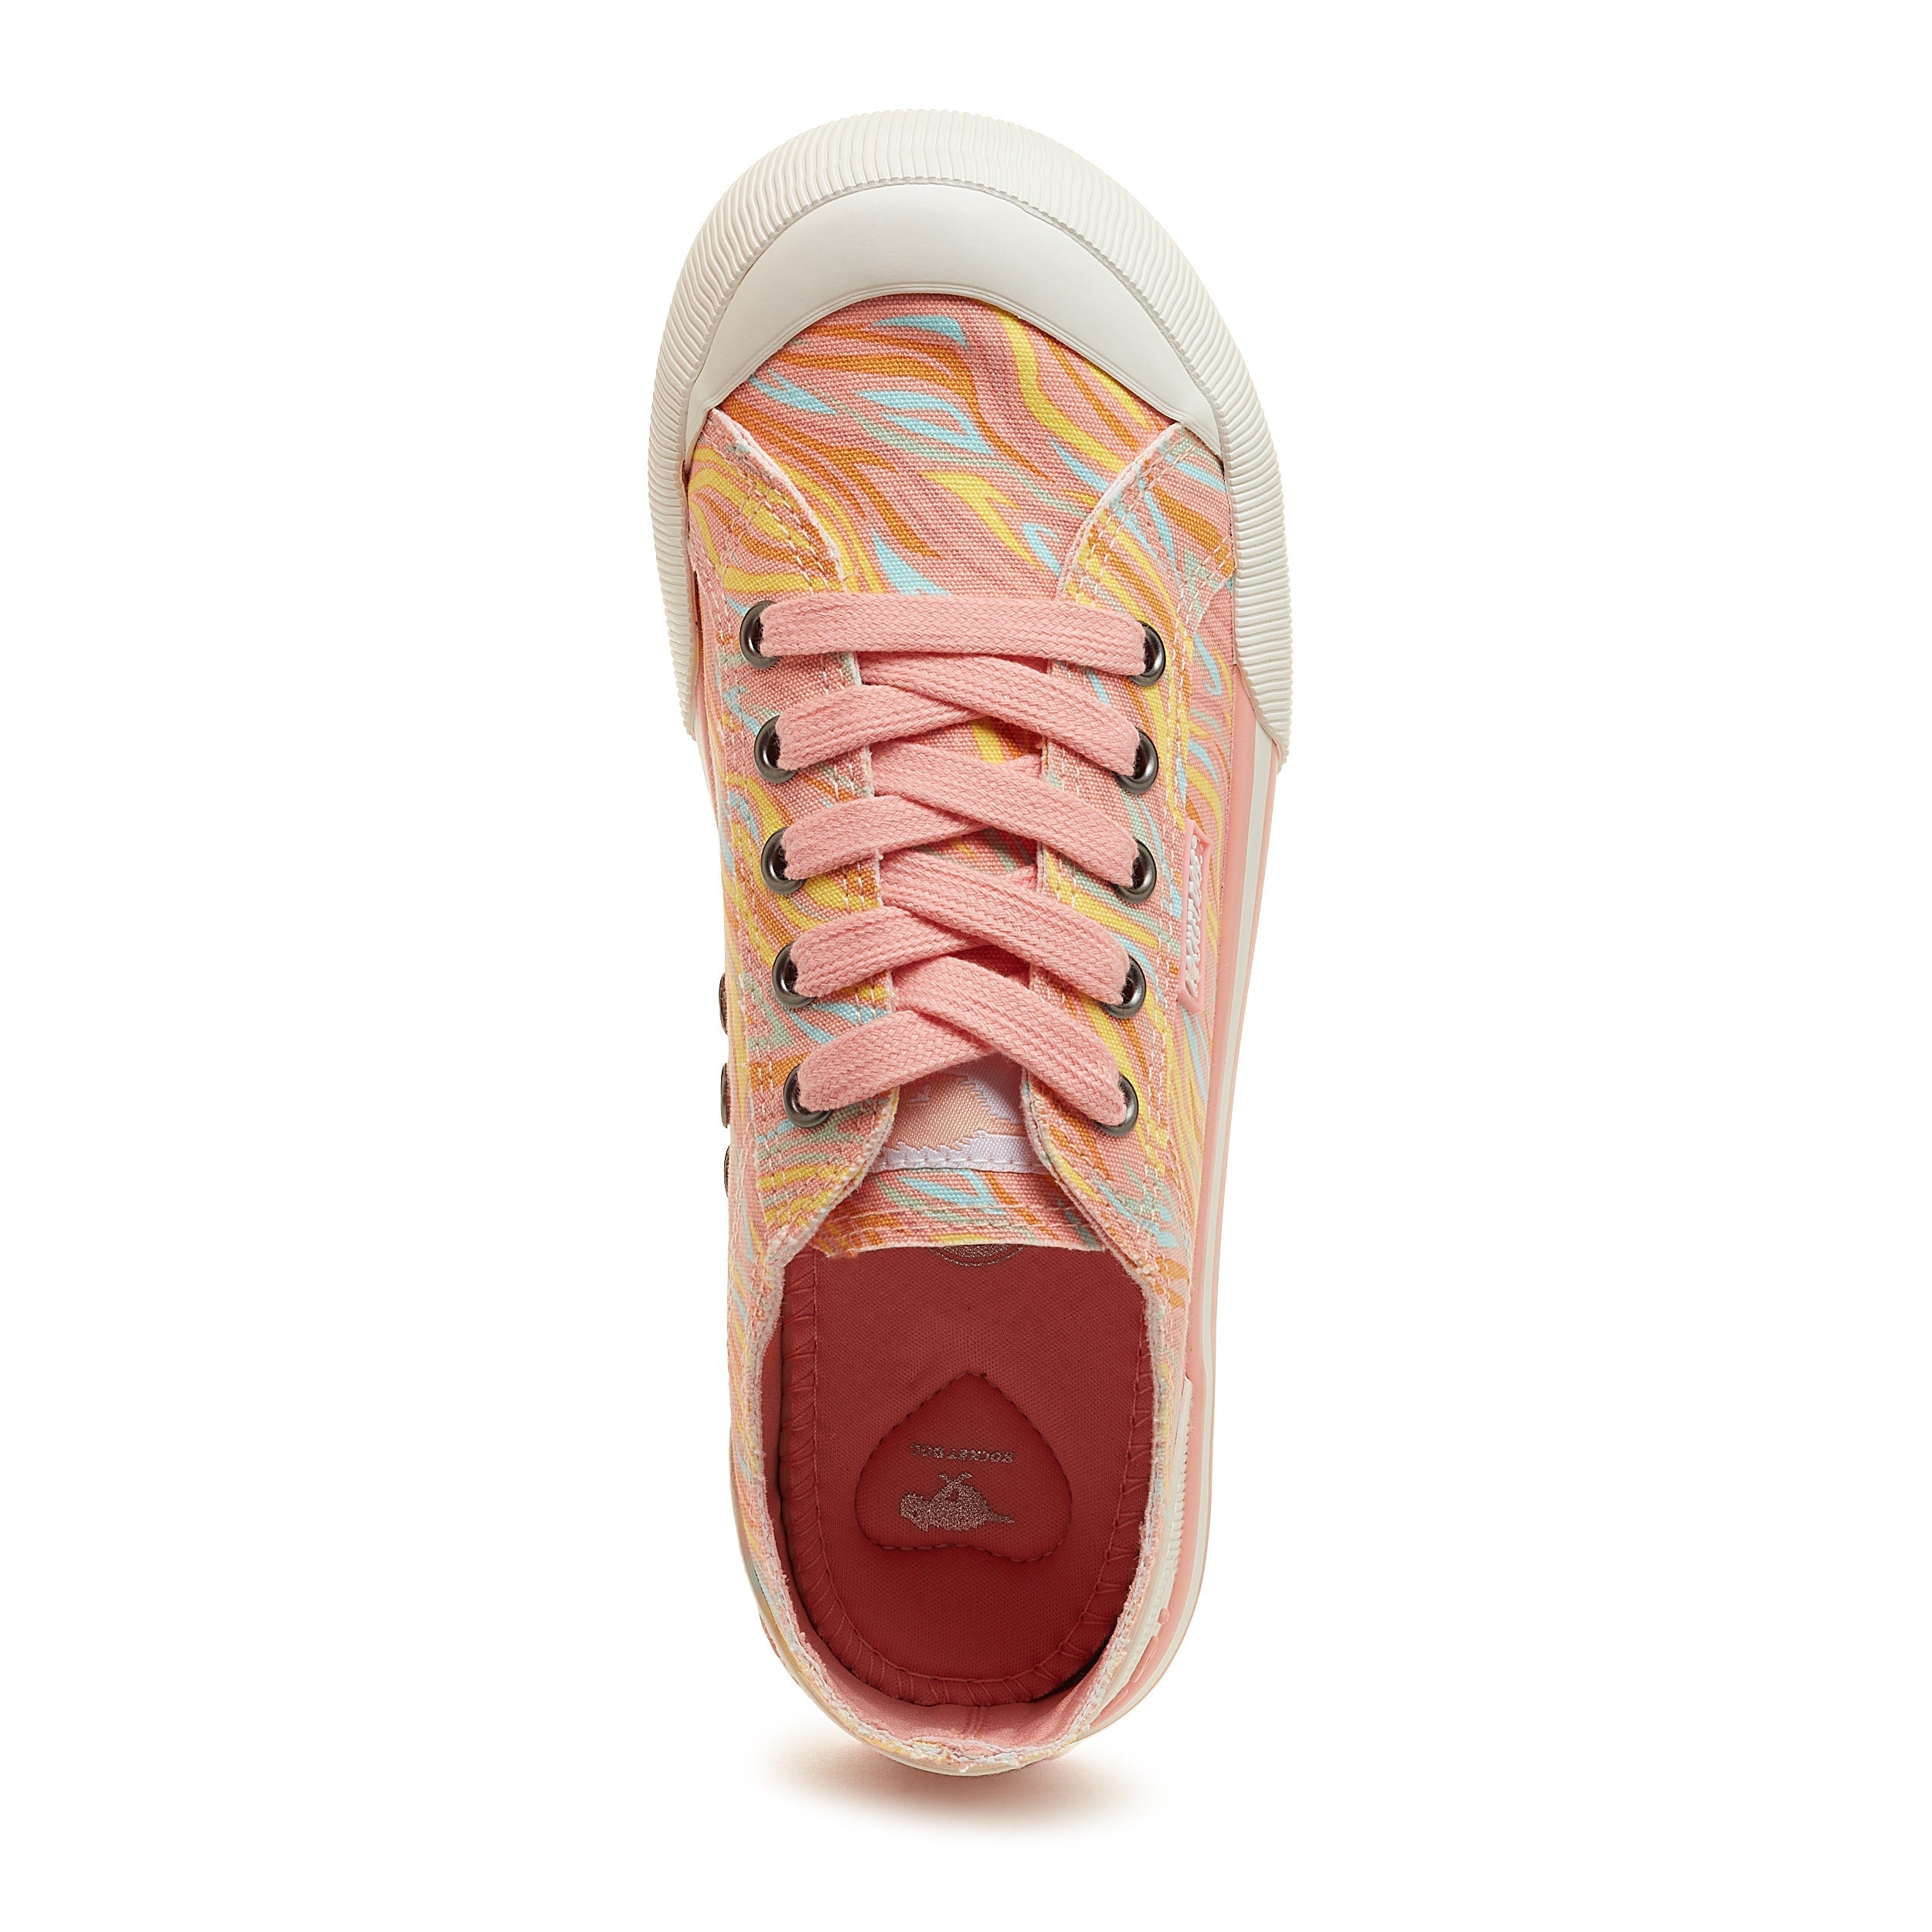 Jazzin Pink Wavy Print Sneakers: Ride the Wave of Style & Comfort